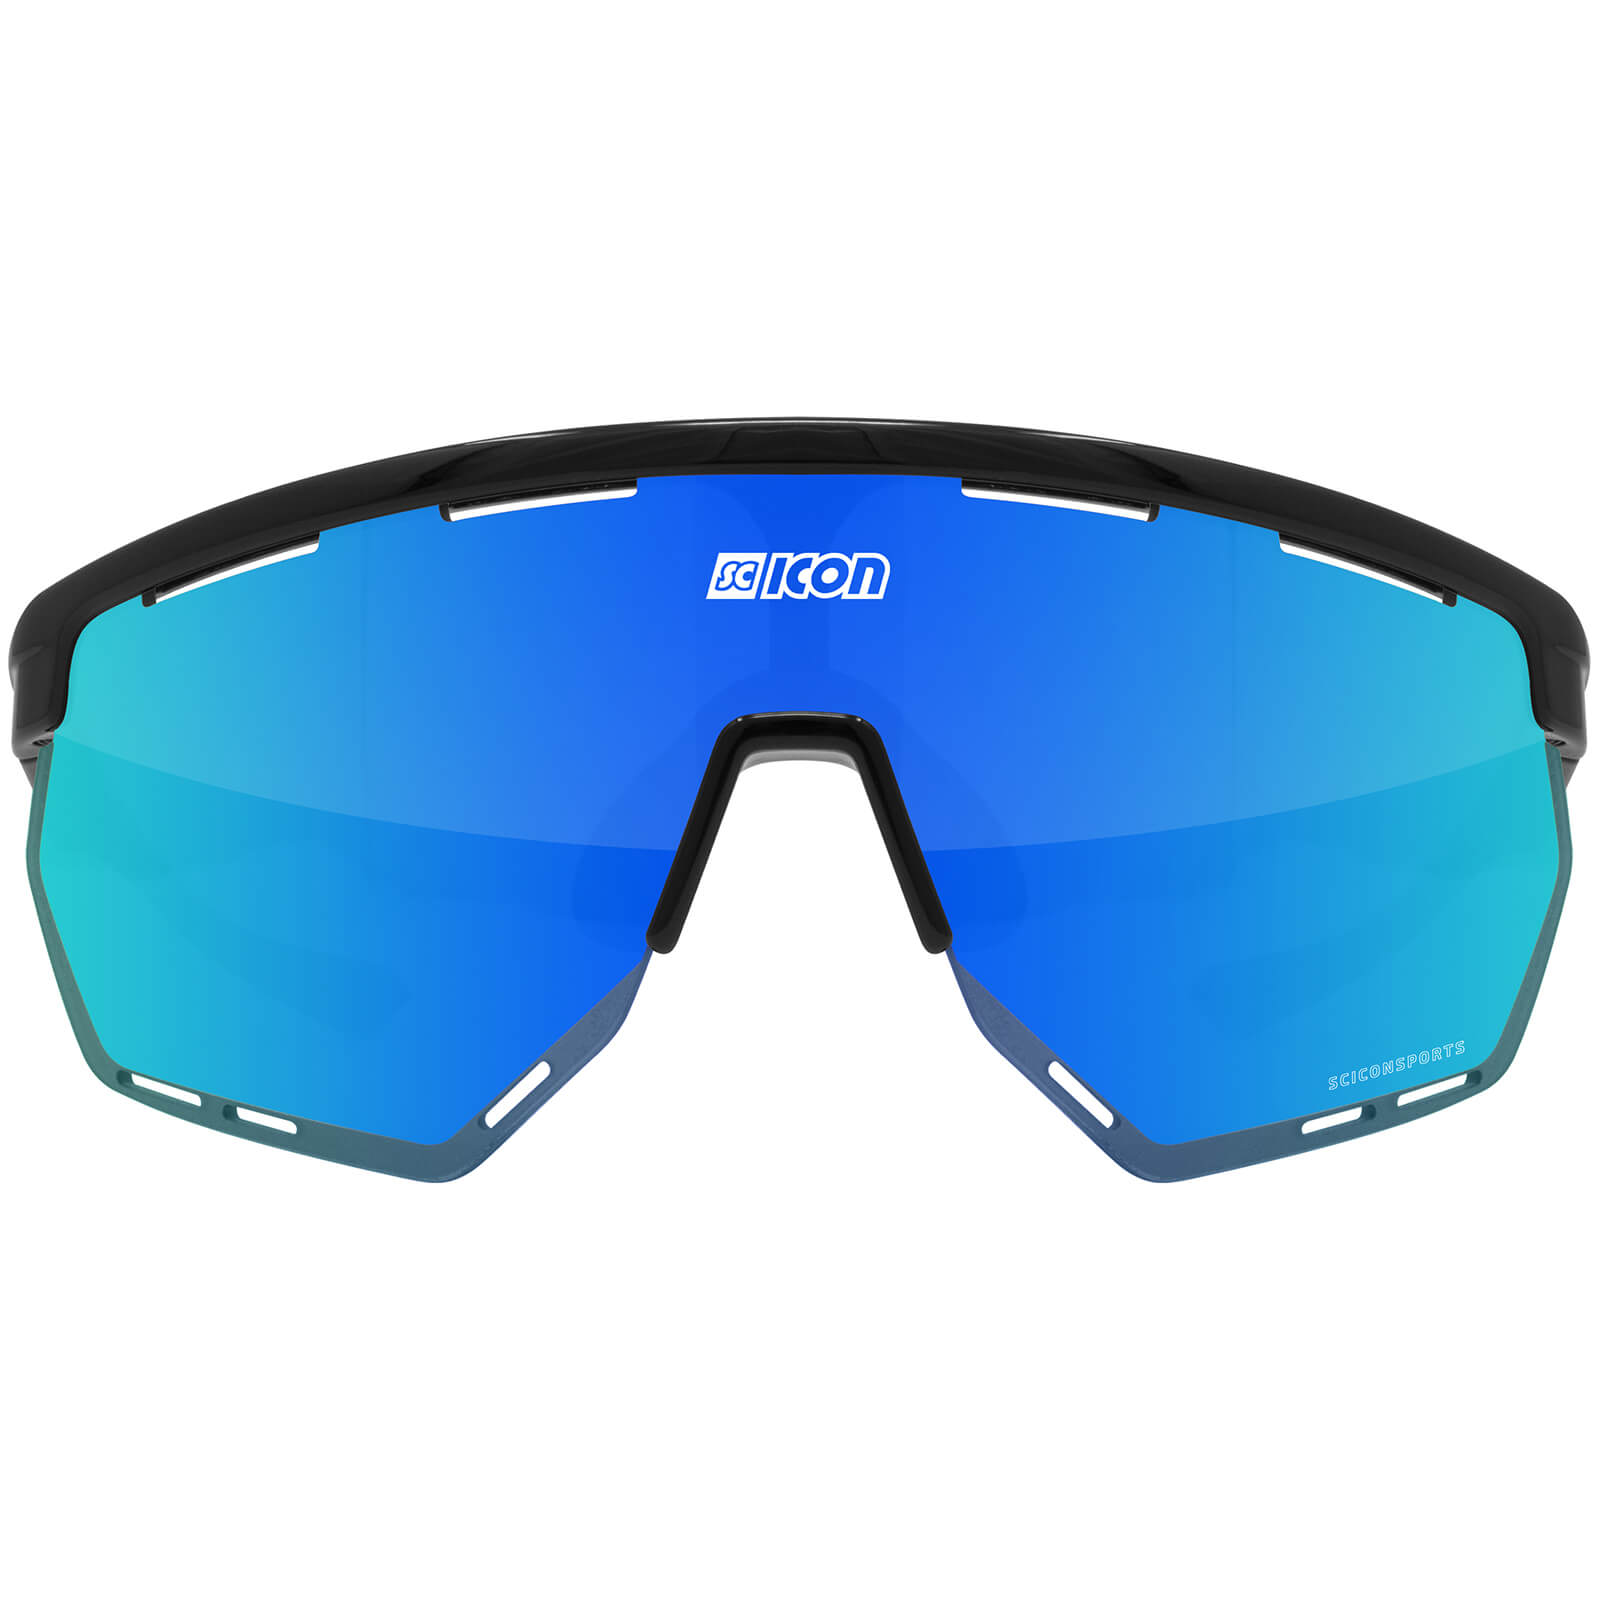 Scicon Aerowing Road Sunglasses - Black Gloss - Multimirror Blue